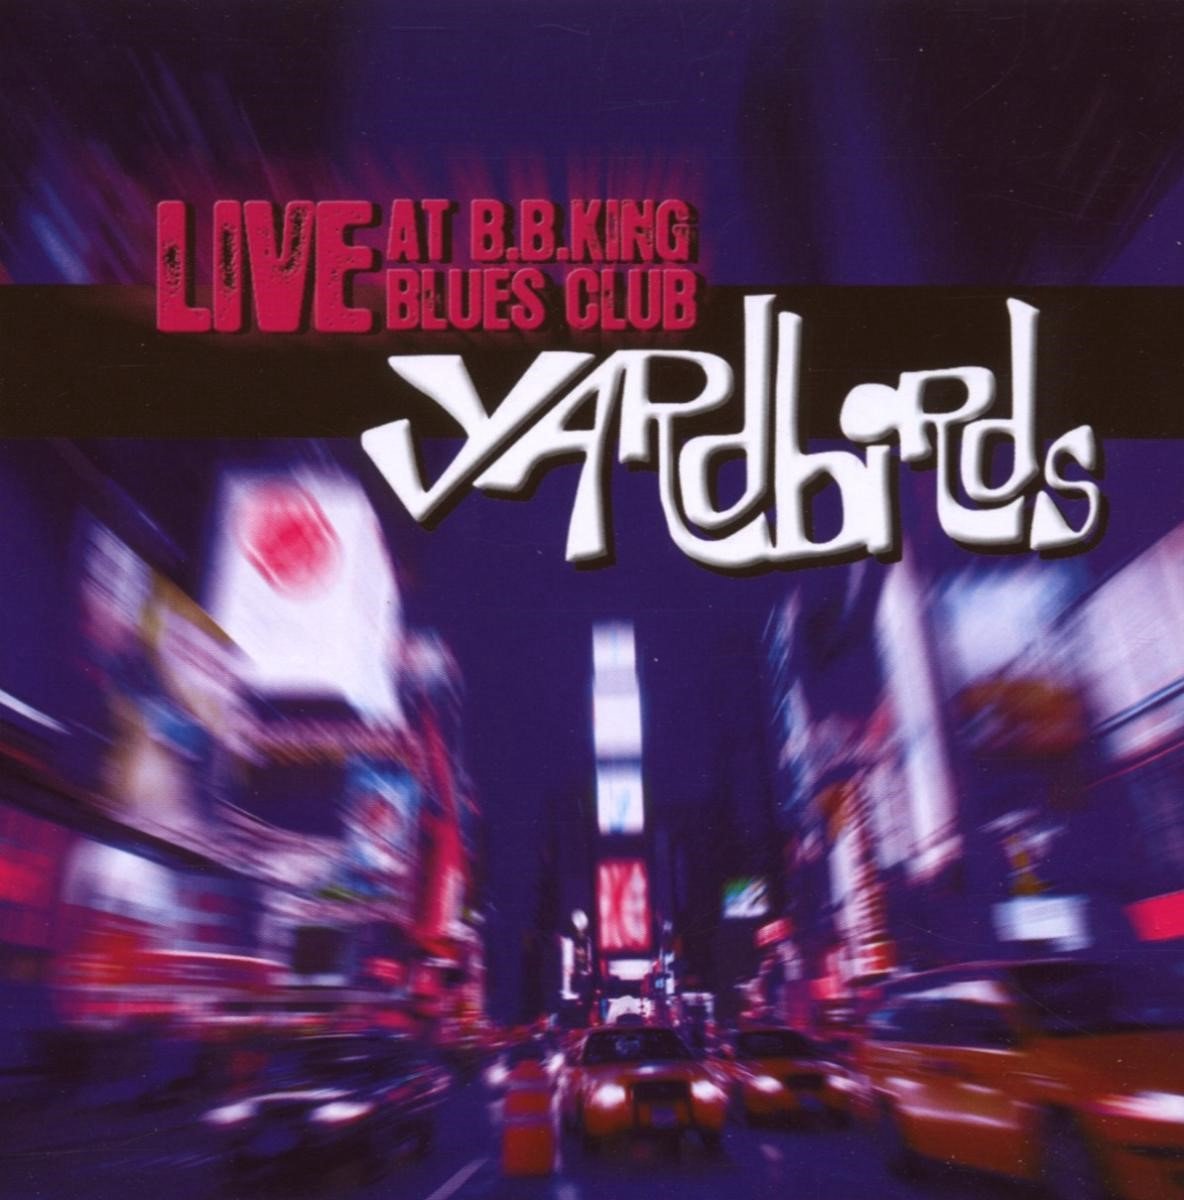 The Yardbirds - Live At B.B.King Blues Club (CD) - The Yardbirds